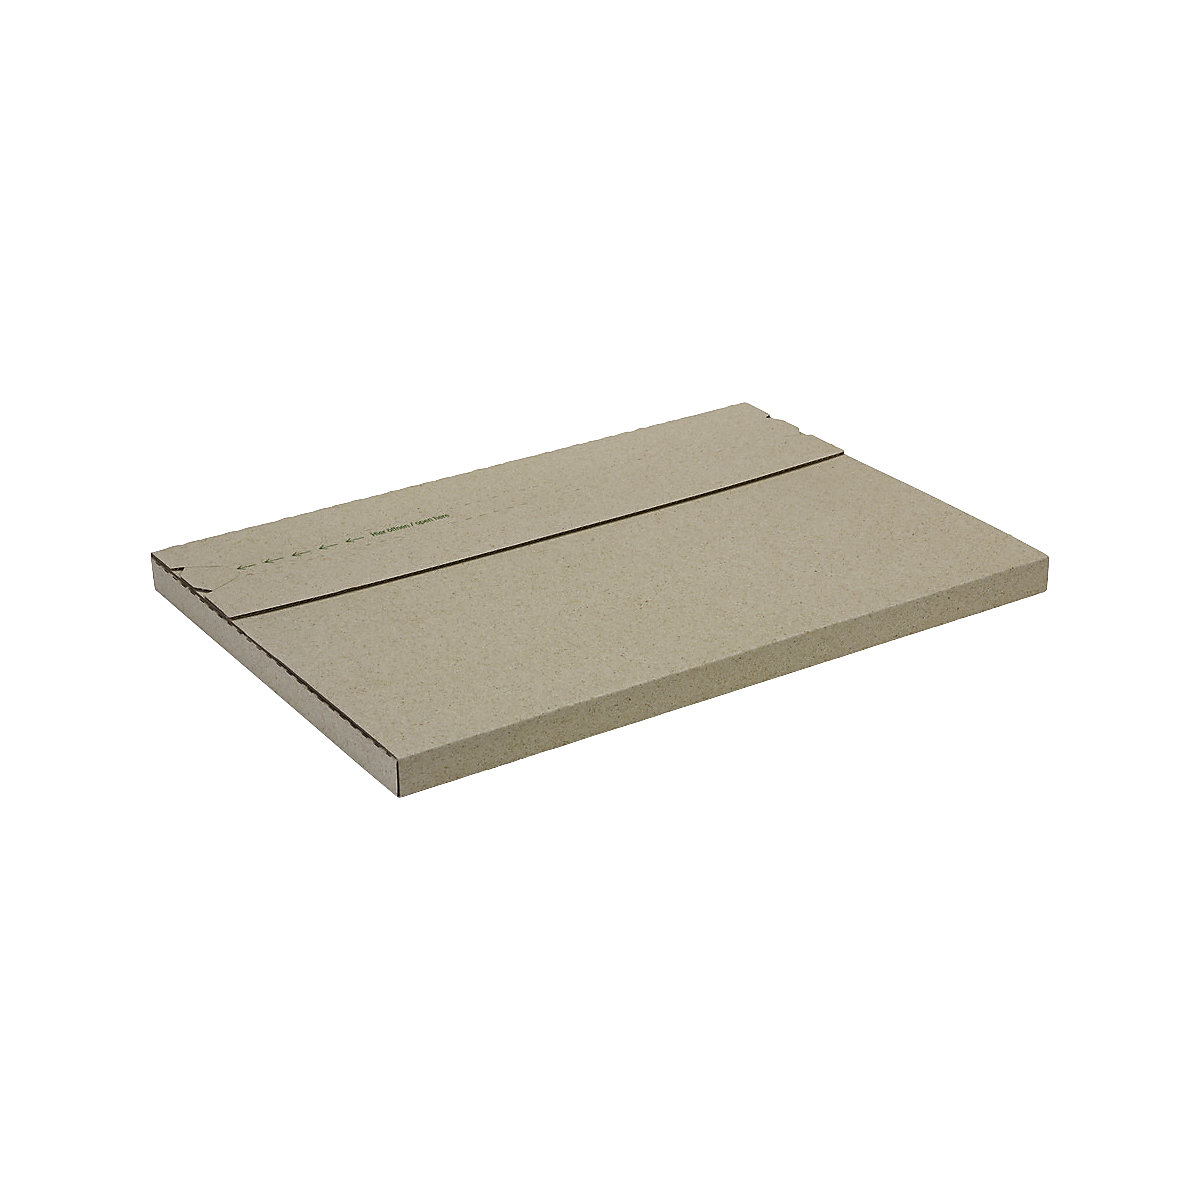 Graspapier-Flachpack terra, selbstklebend, Innen-LxBxH 349 x 246 x 15 mm, ab 200 Stk-4